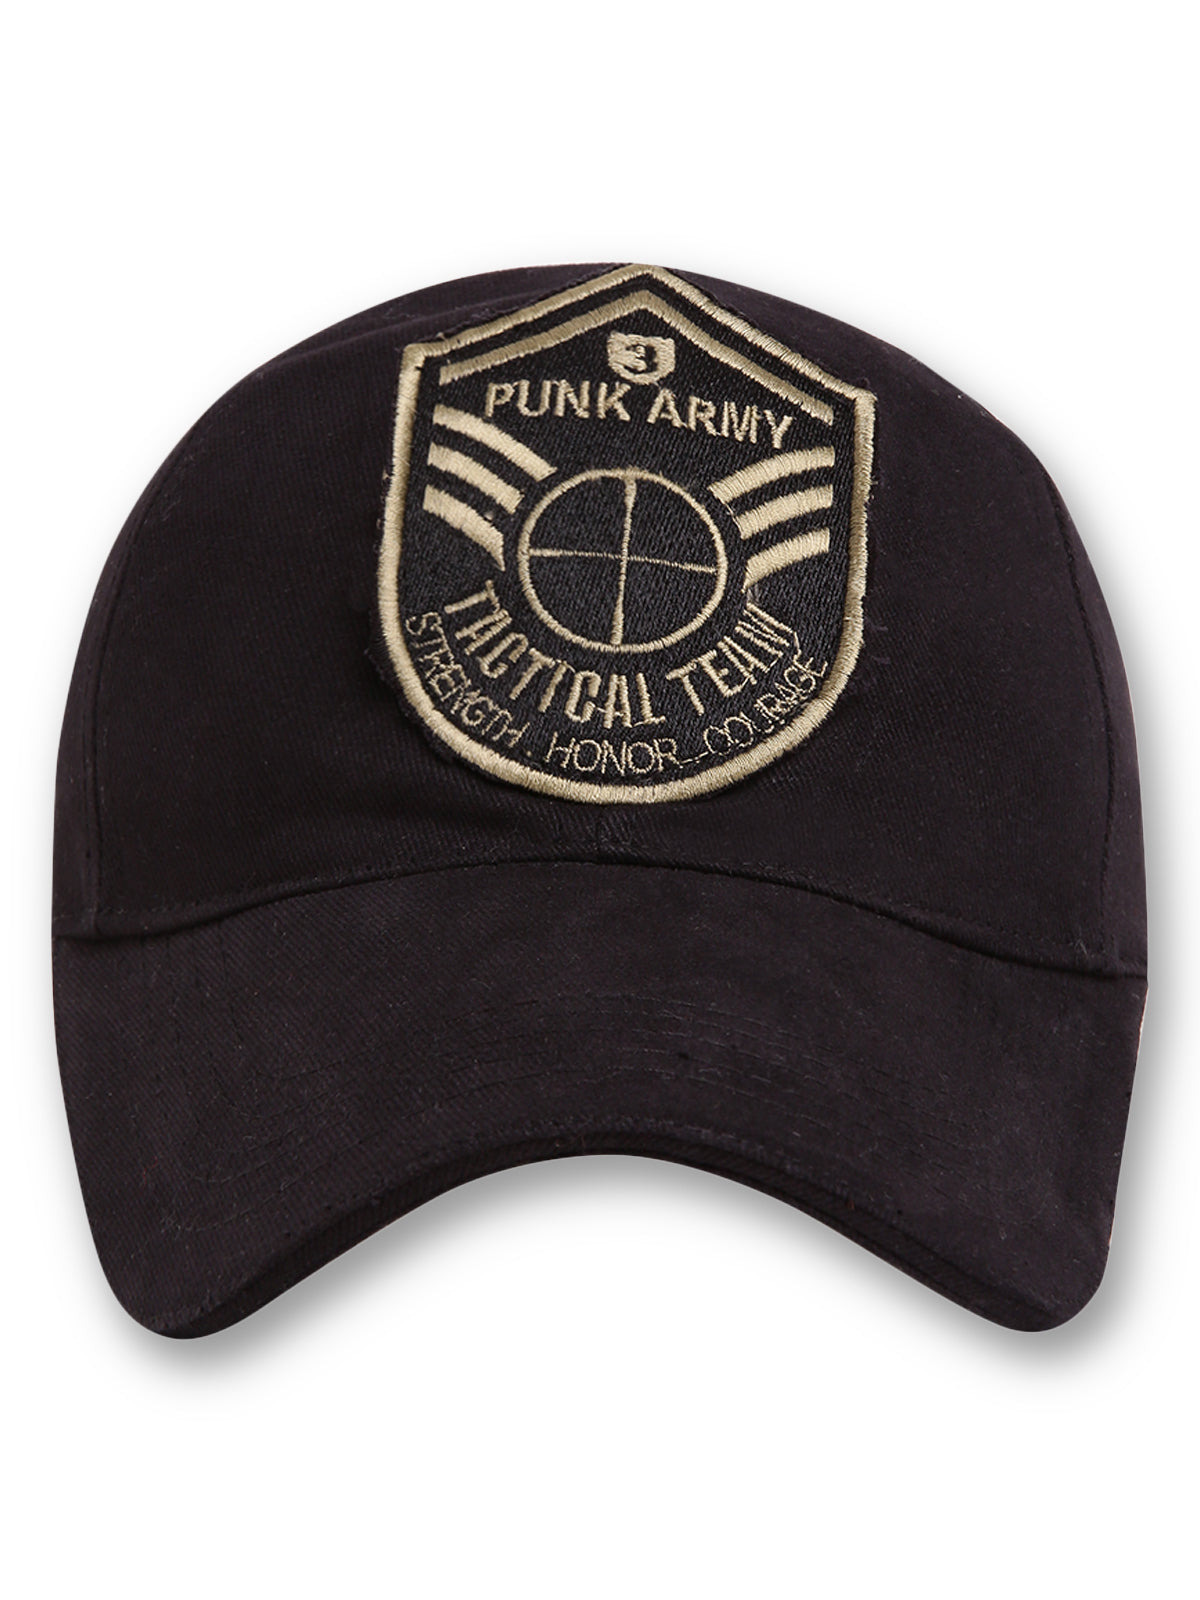 Punk Army Cap Black